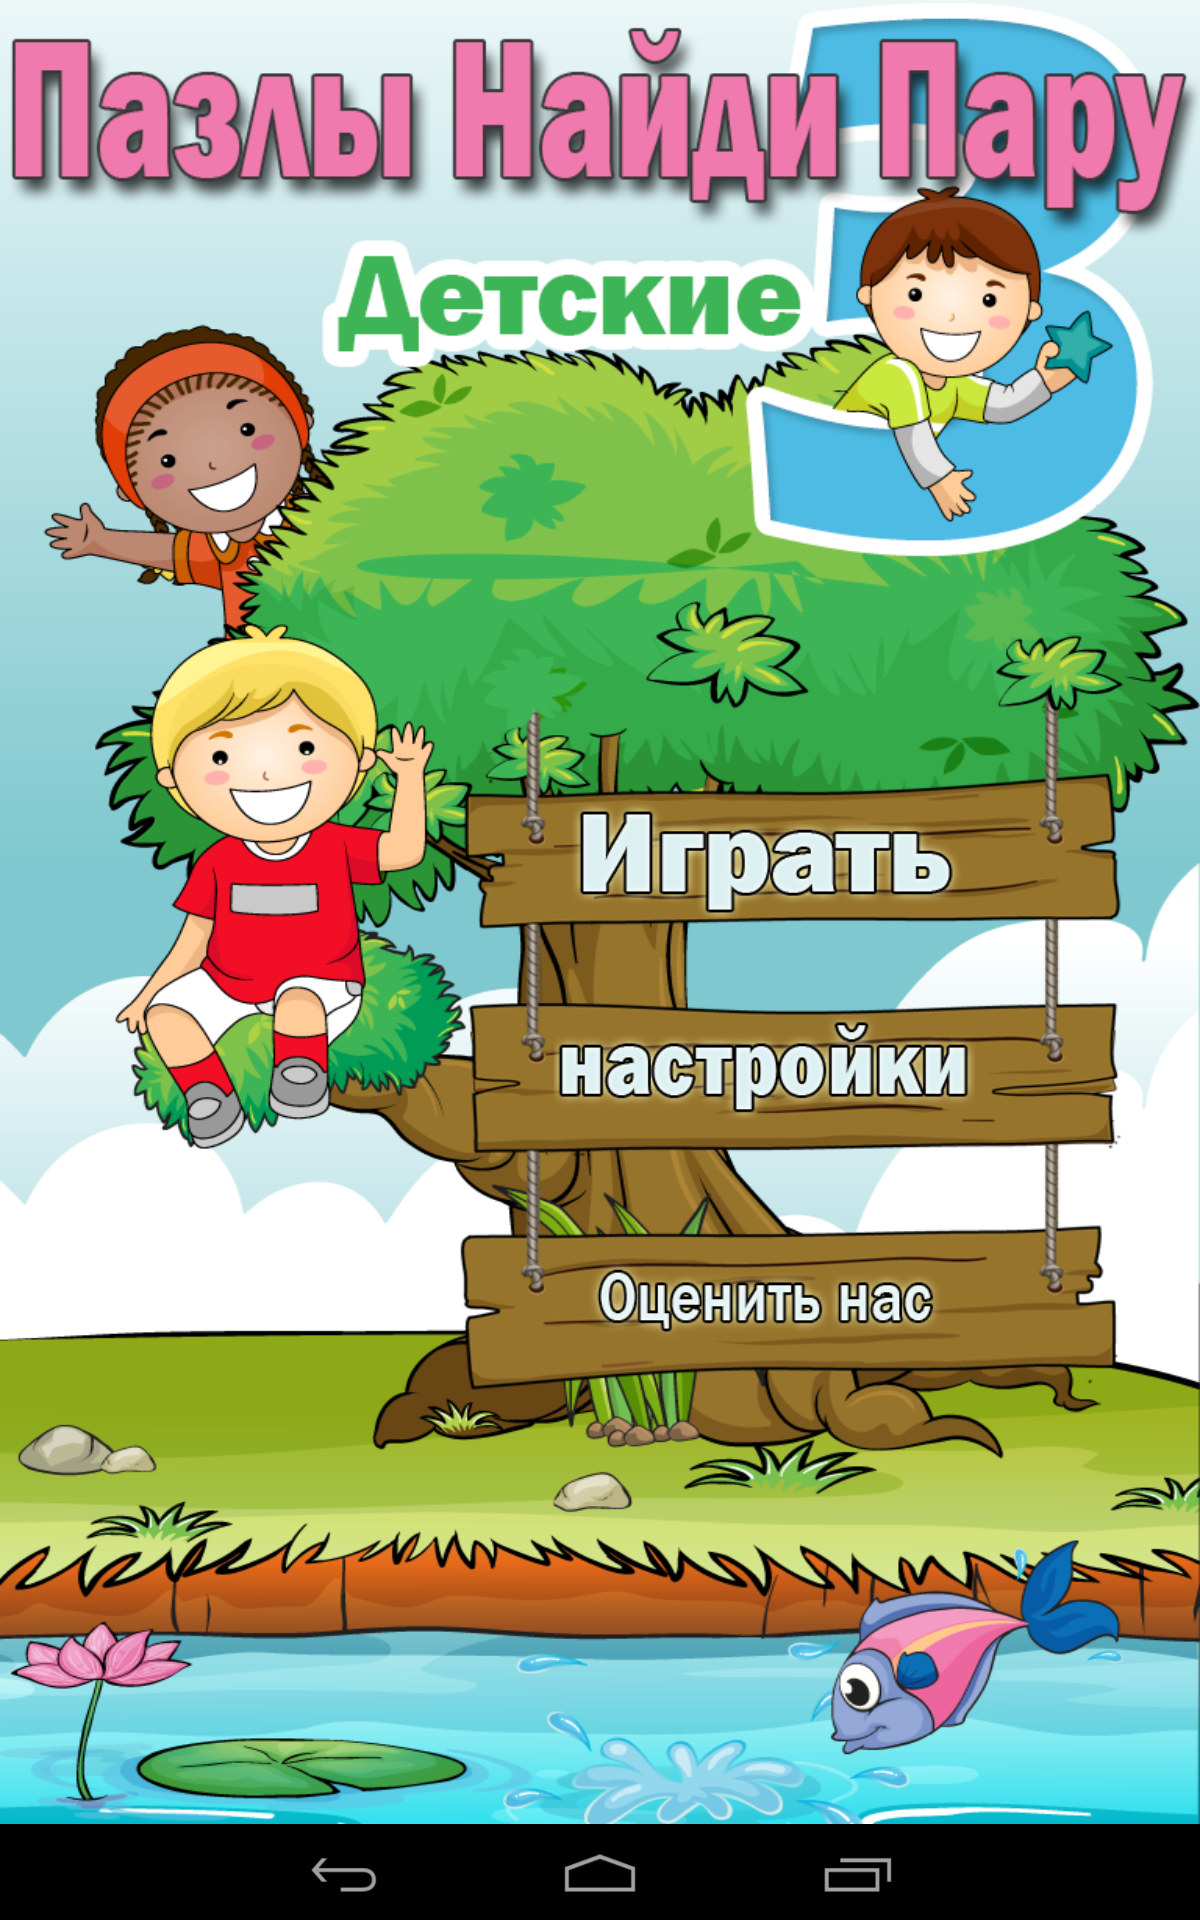 Android application Preschool Adventures-3 Pro screenshort